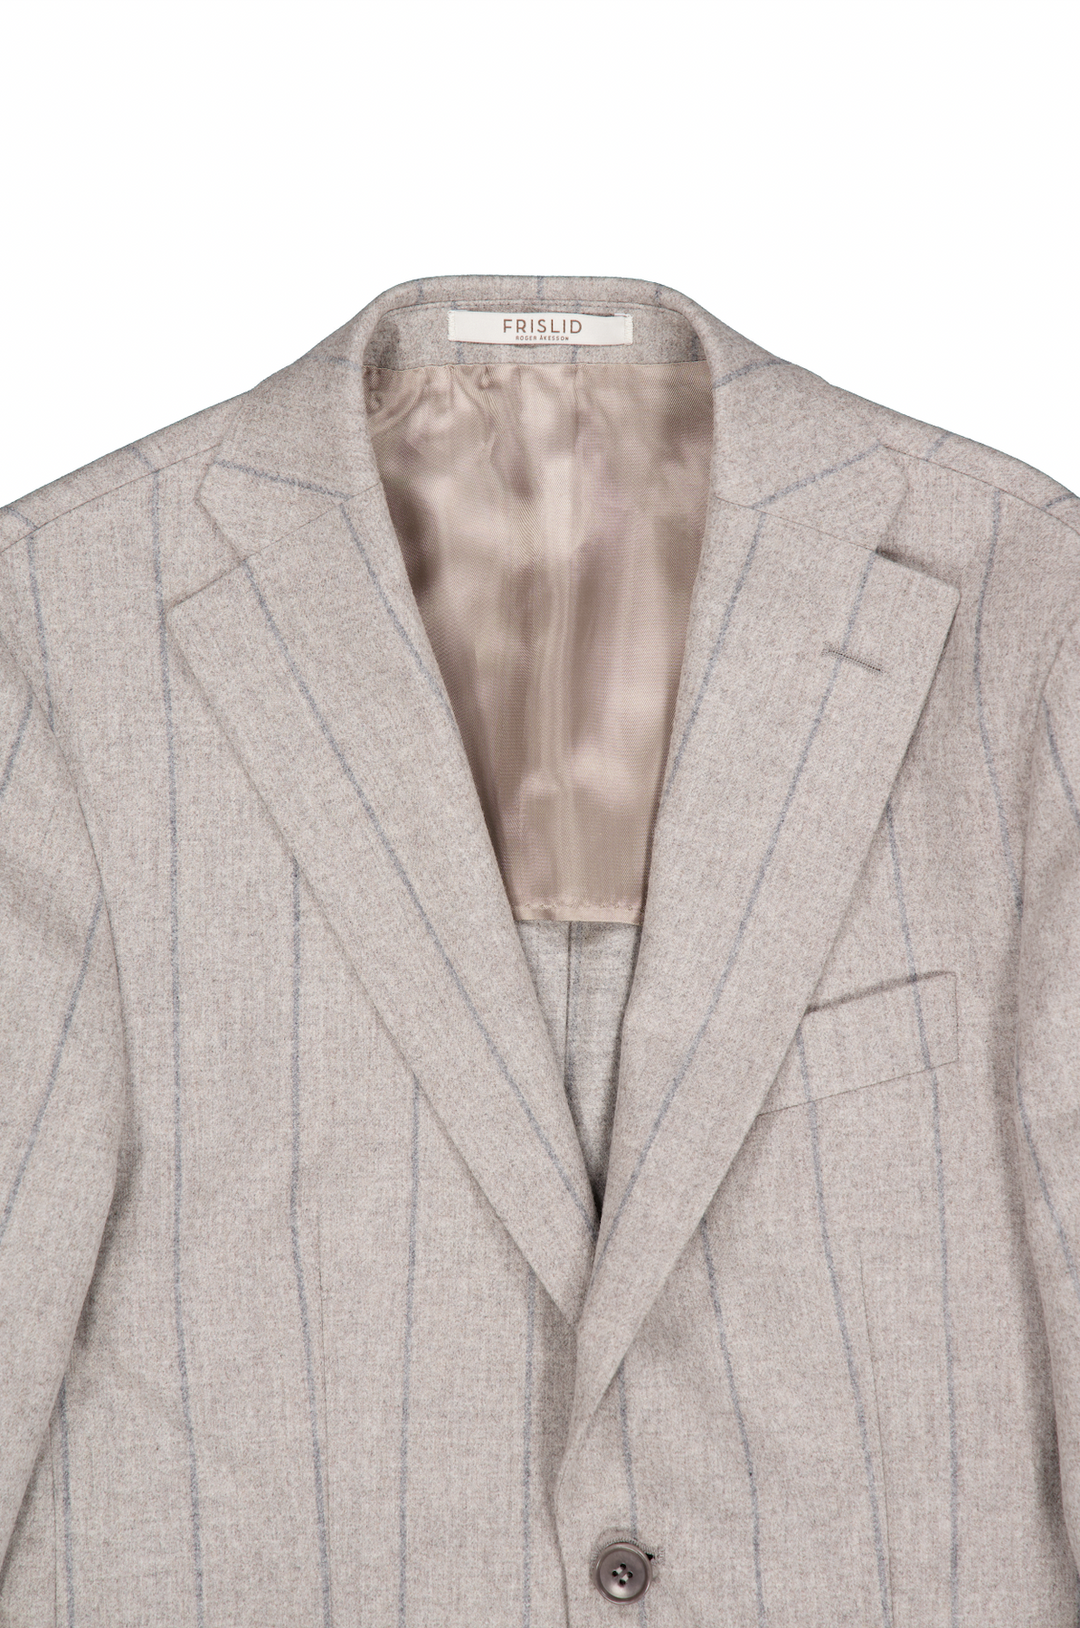 Salerno Hanzo Flannel Suit Pinstripe